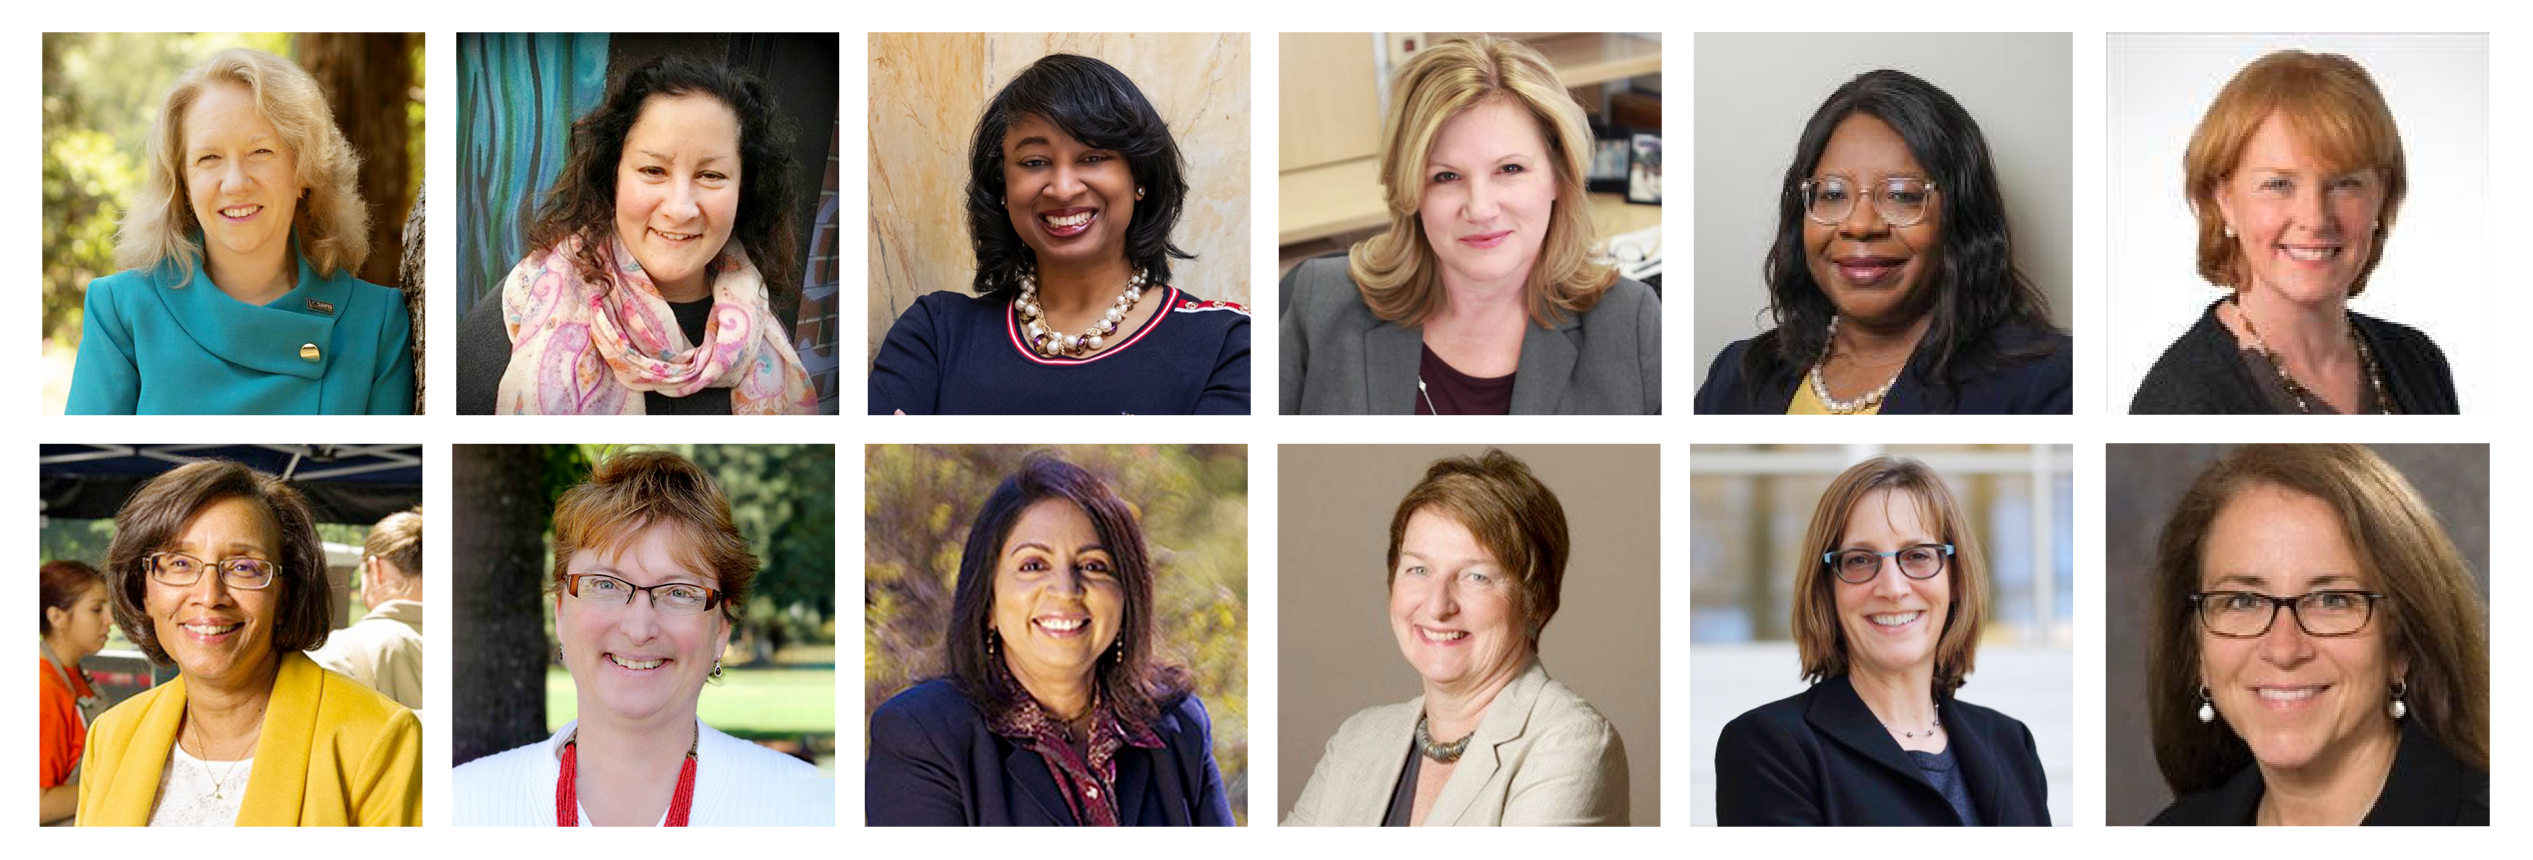 Headshots of 12 women in leadership roles at UC Davis